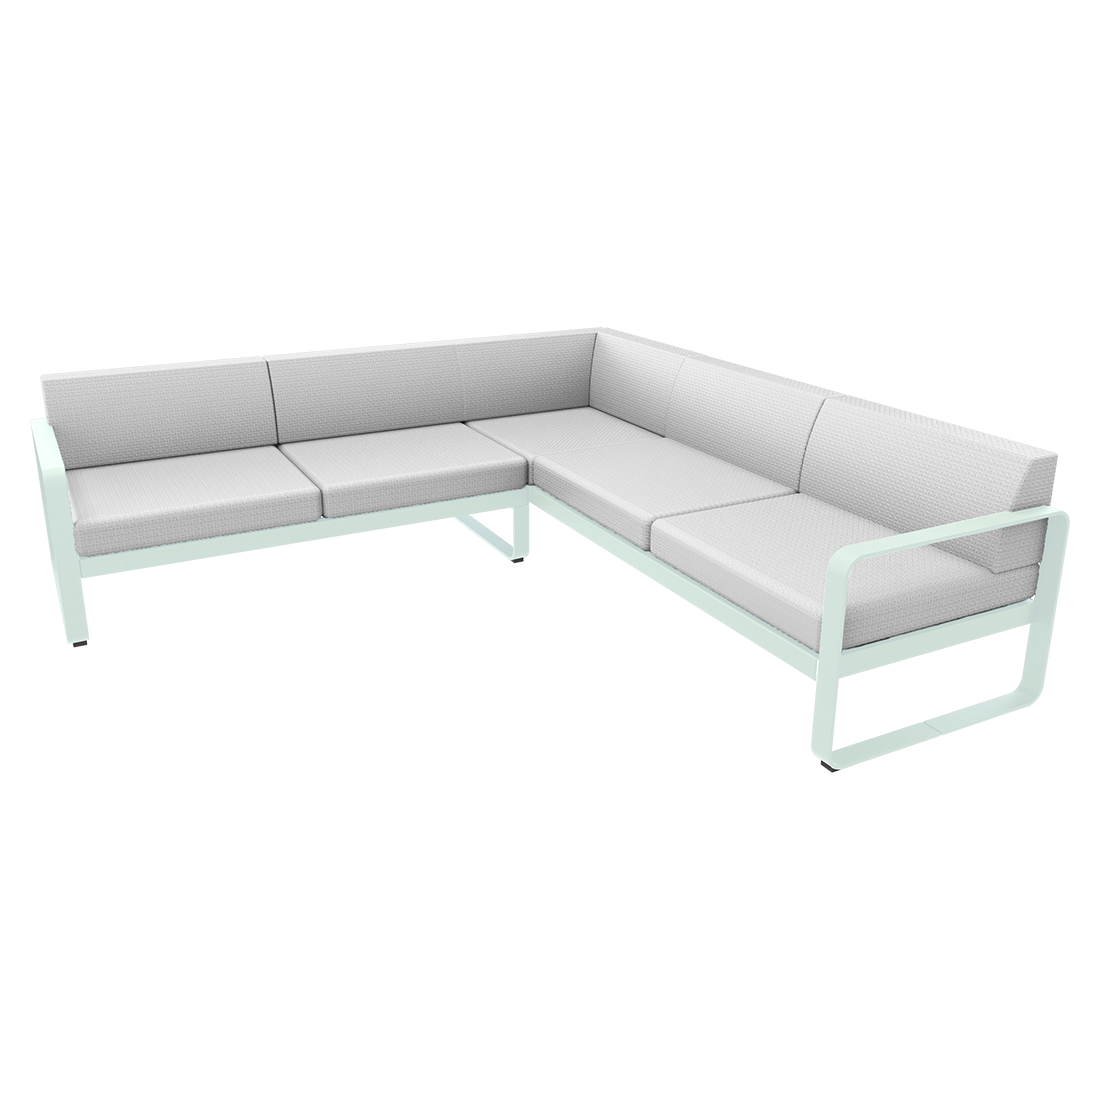  Bộ sofa BELLEVIE 2A 